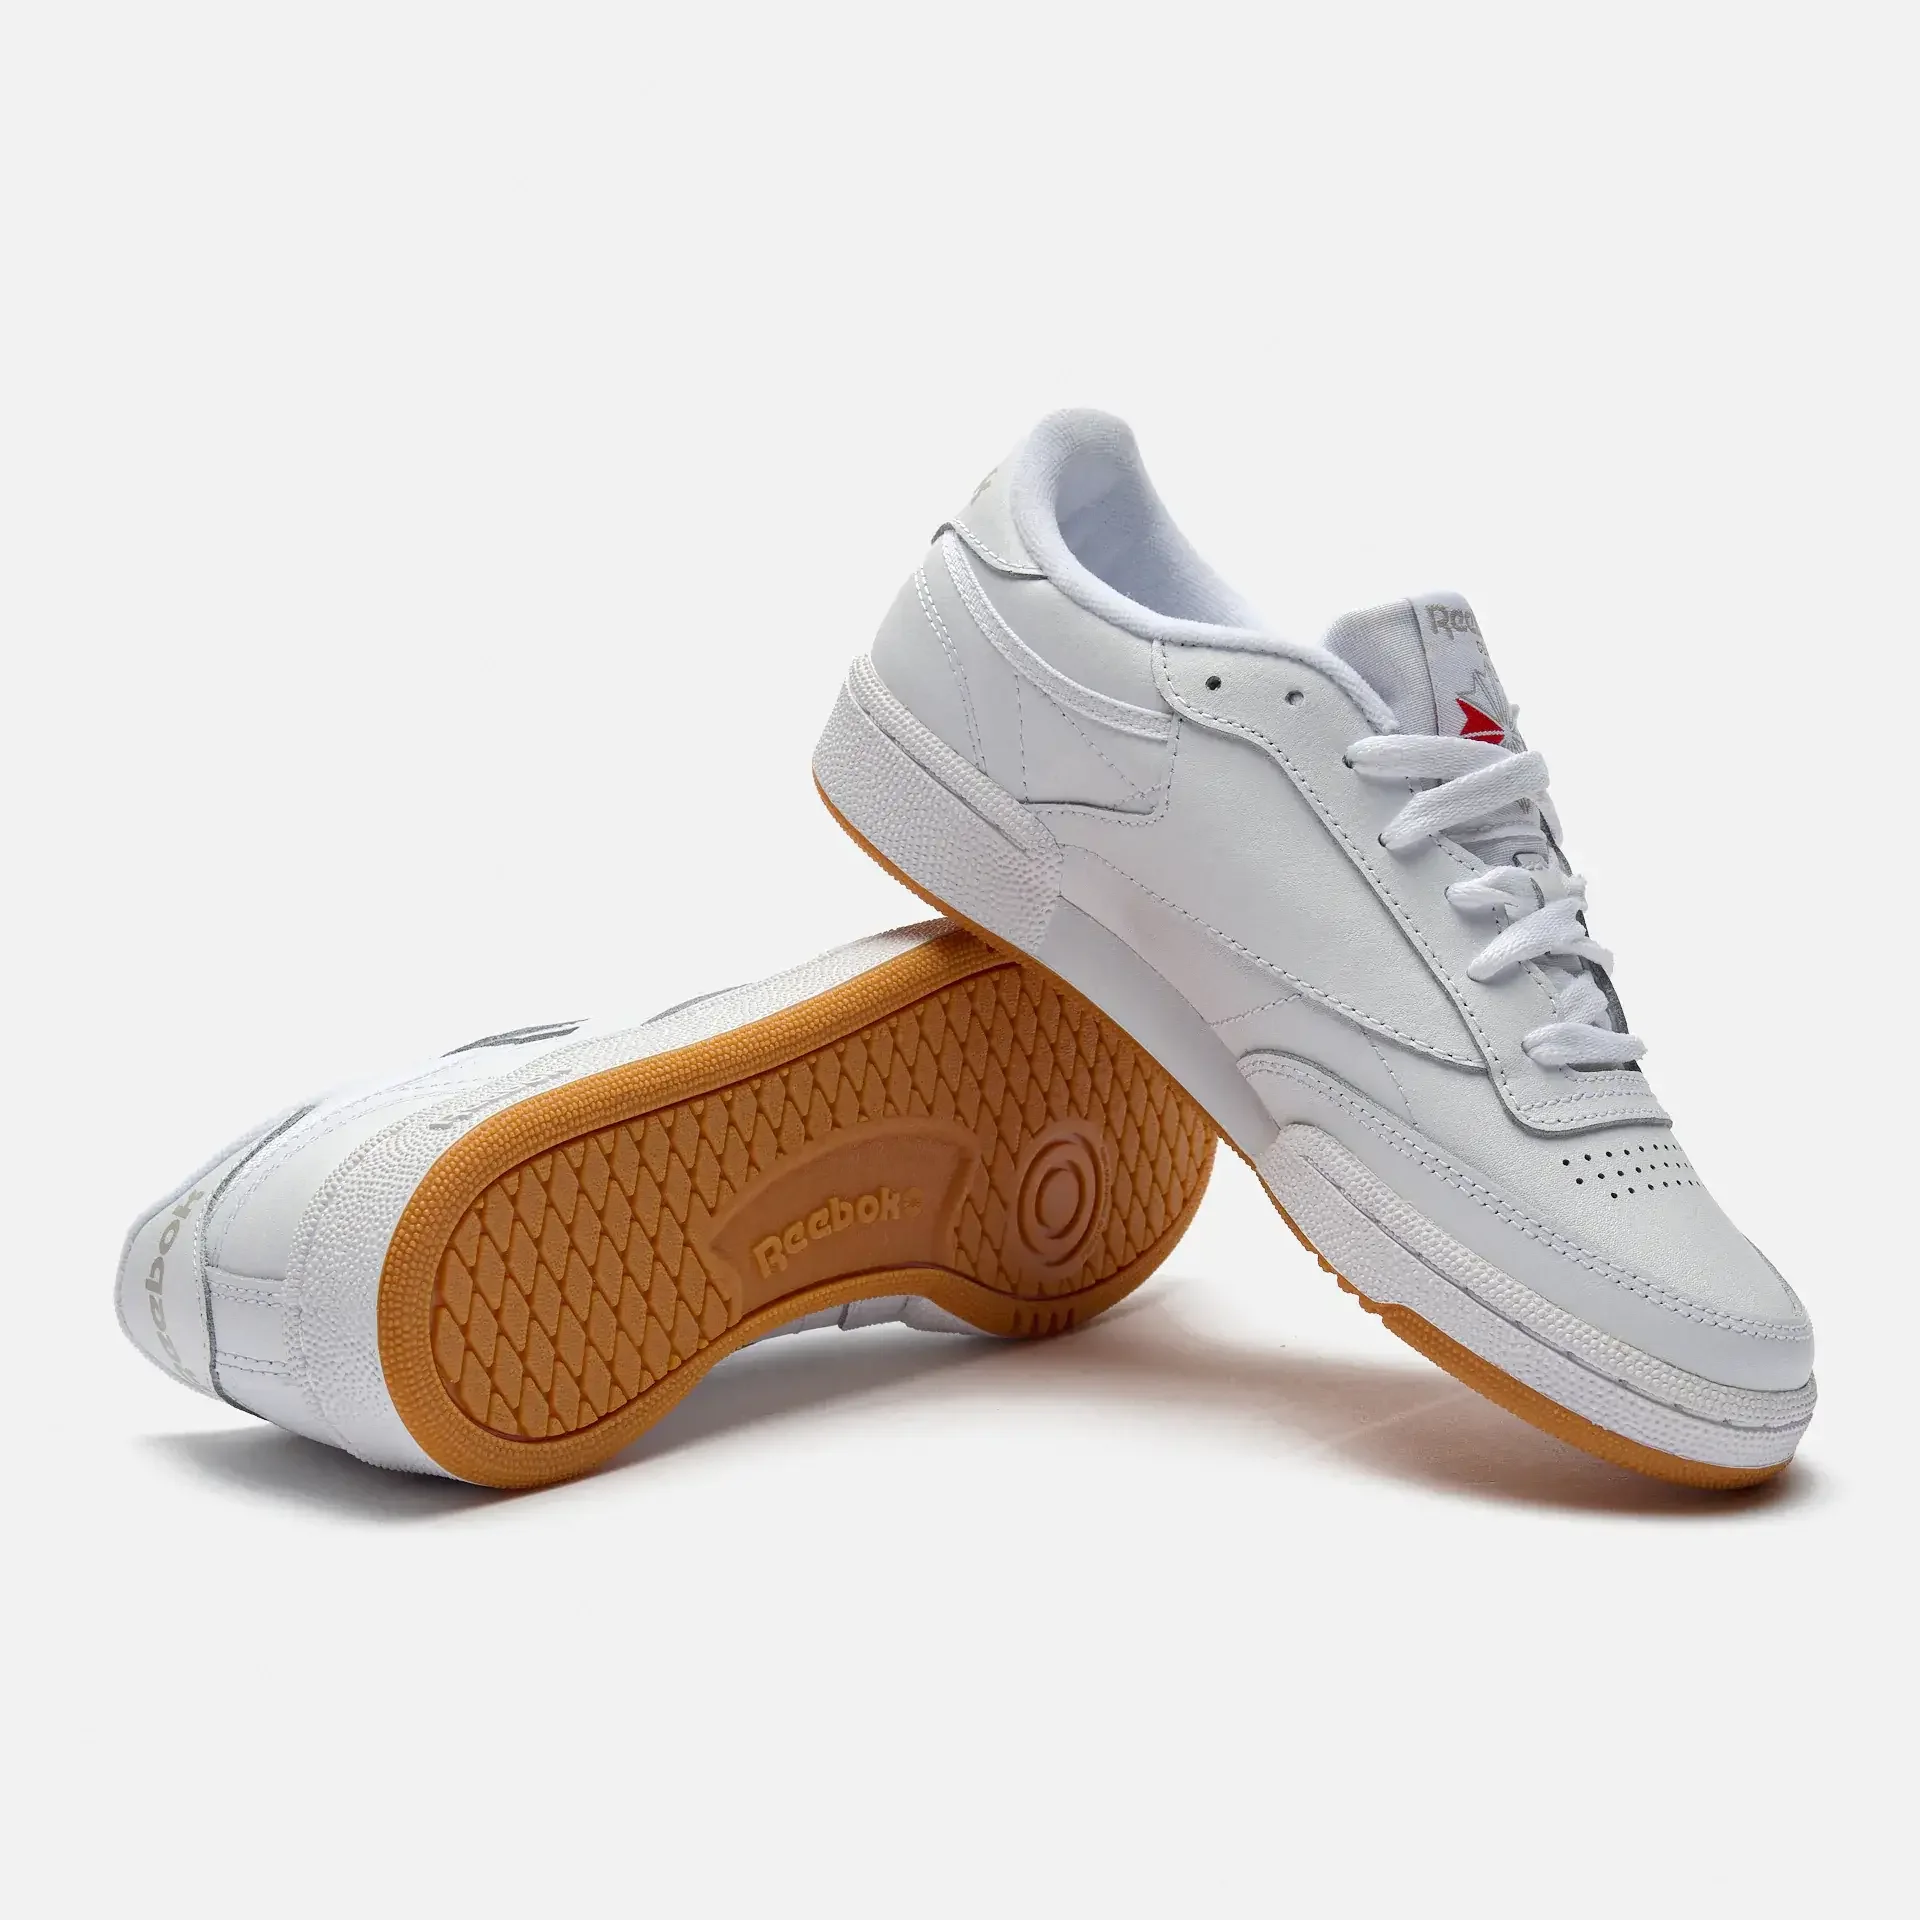 Reebok Club C 85 Sneaker White/Light Grey/Gum